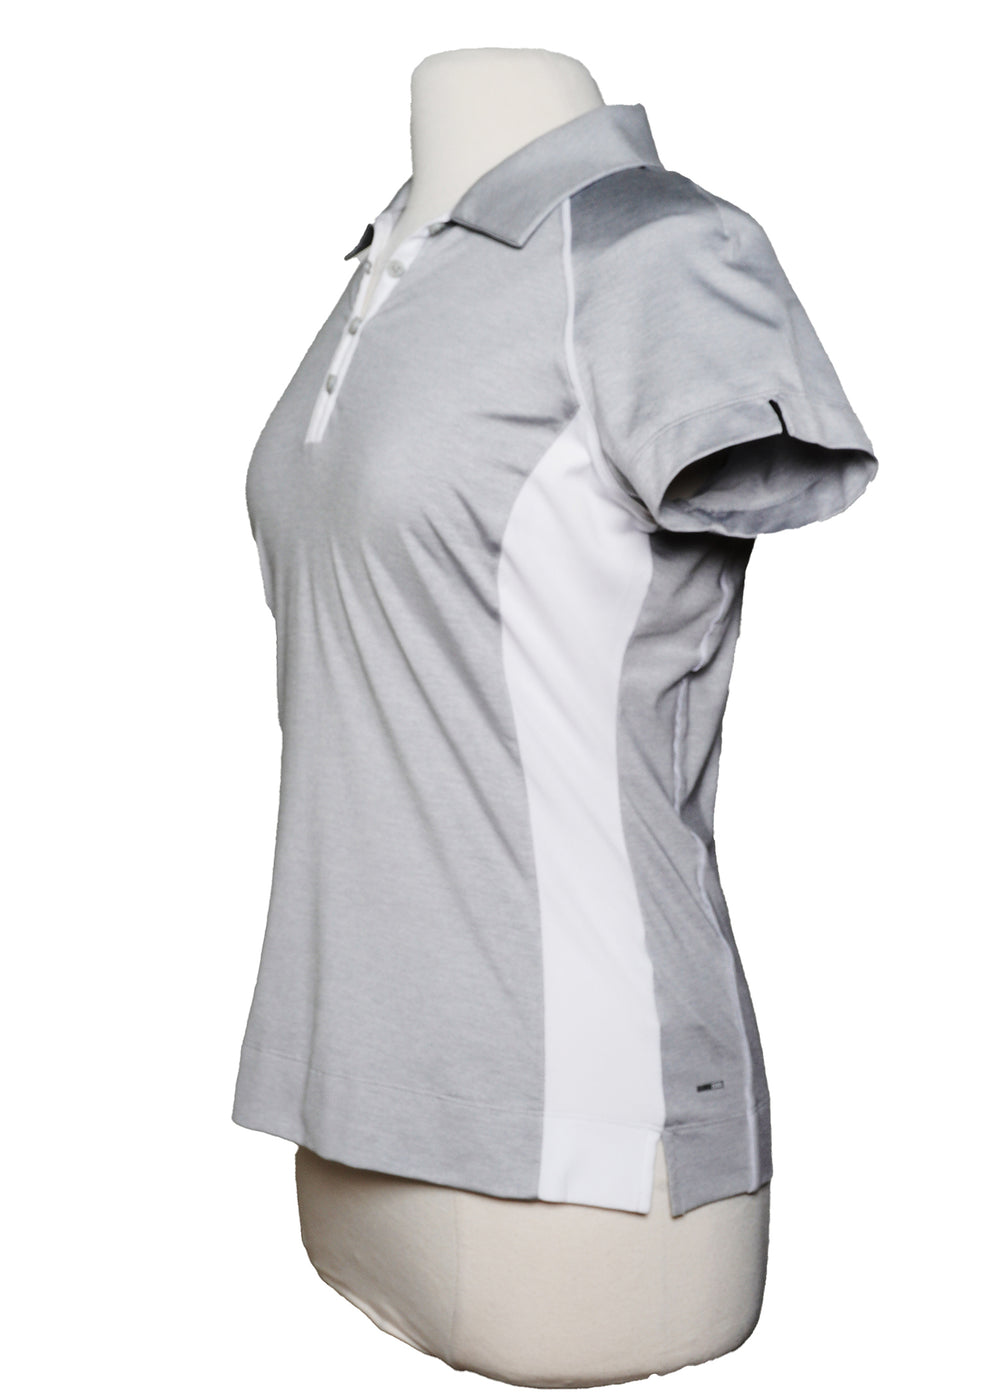 Adidas Short Sleeve Golf Shirt - Grey -  Size Medium - Skorzie